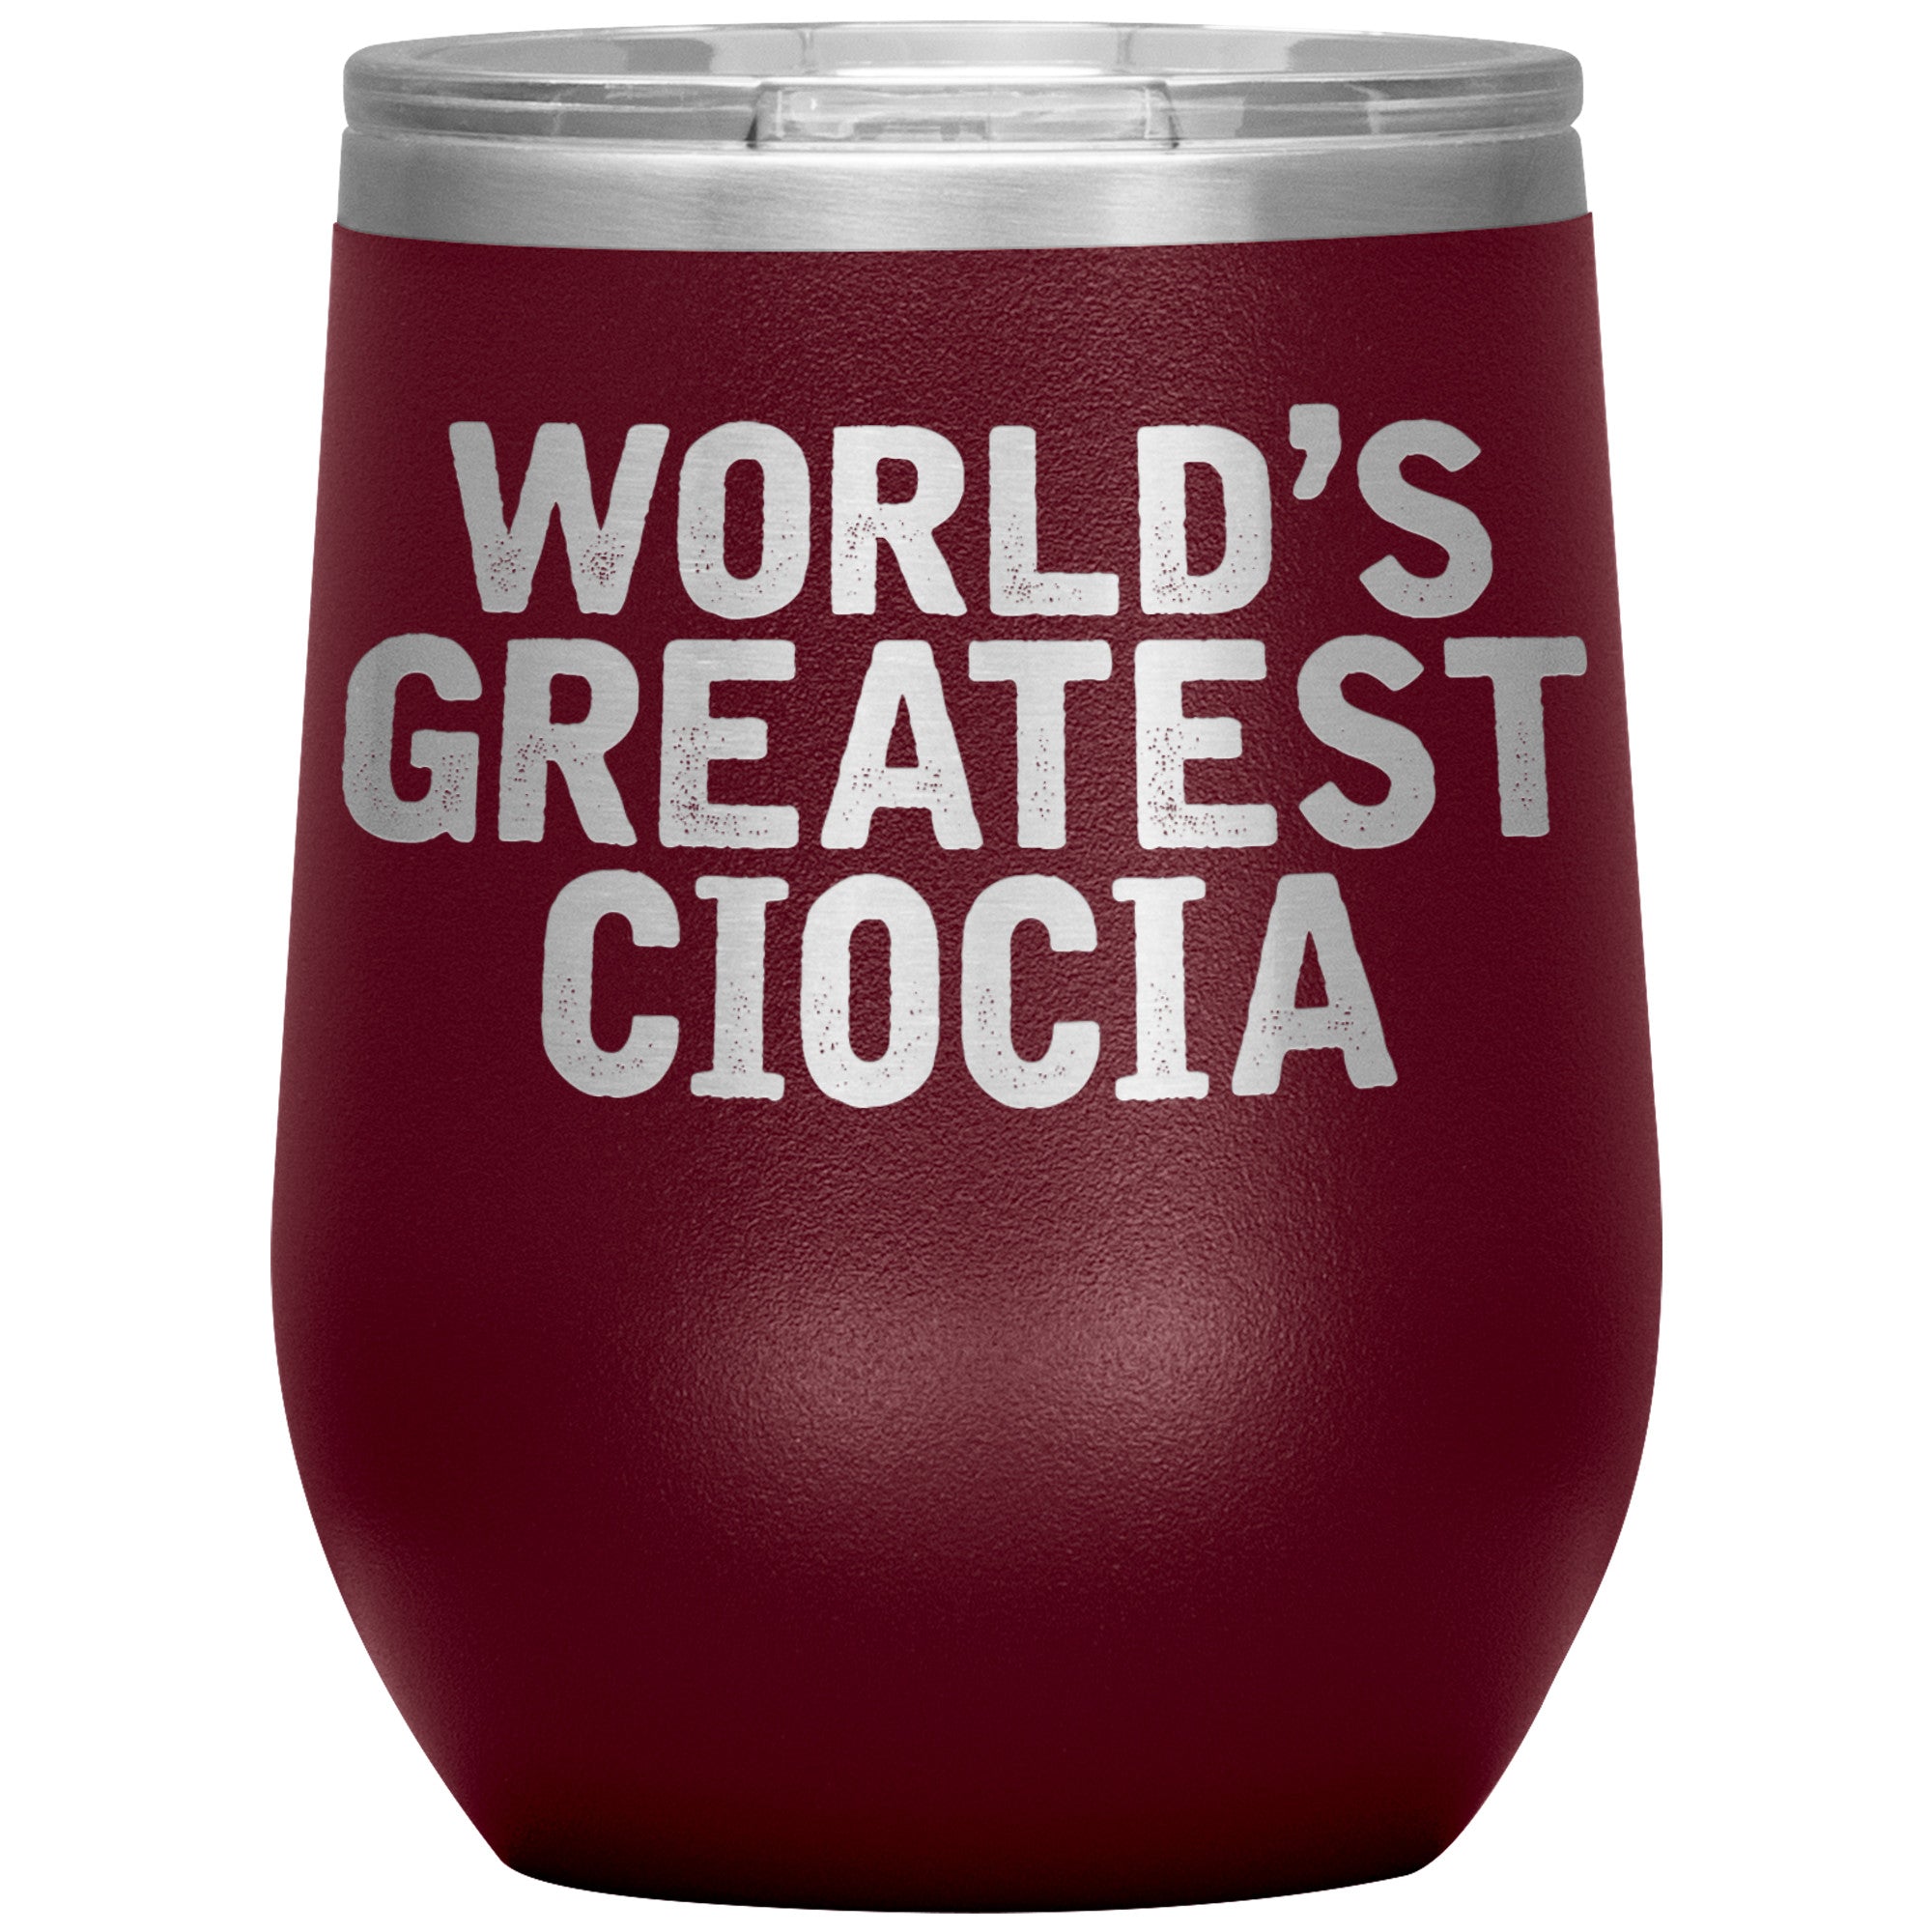 World's Greatest Ciocia Insulated Wine Tumbler Tumblers teelaunch Maroon  